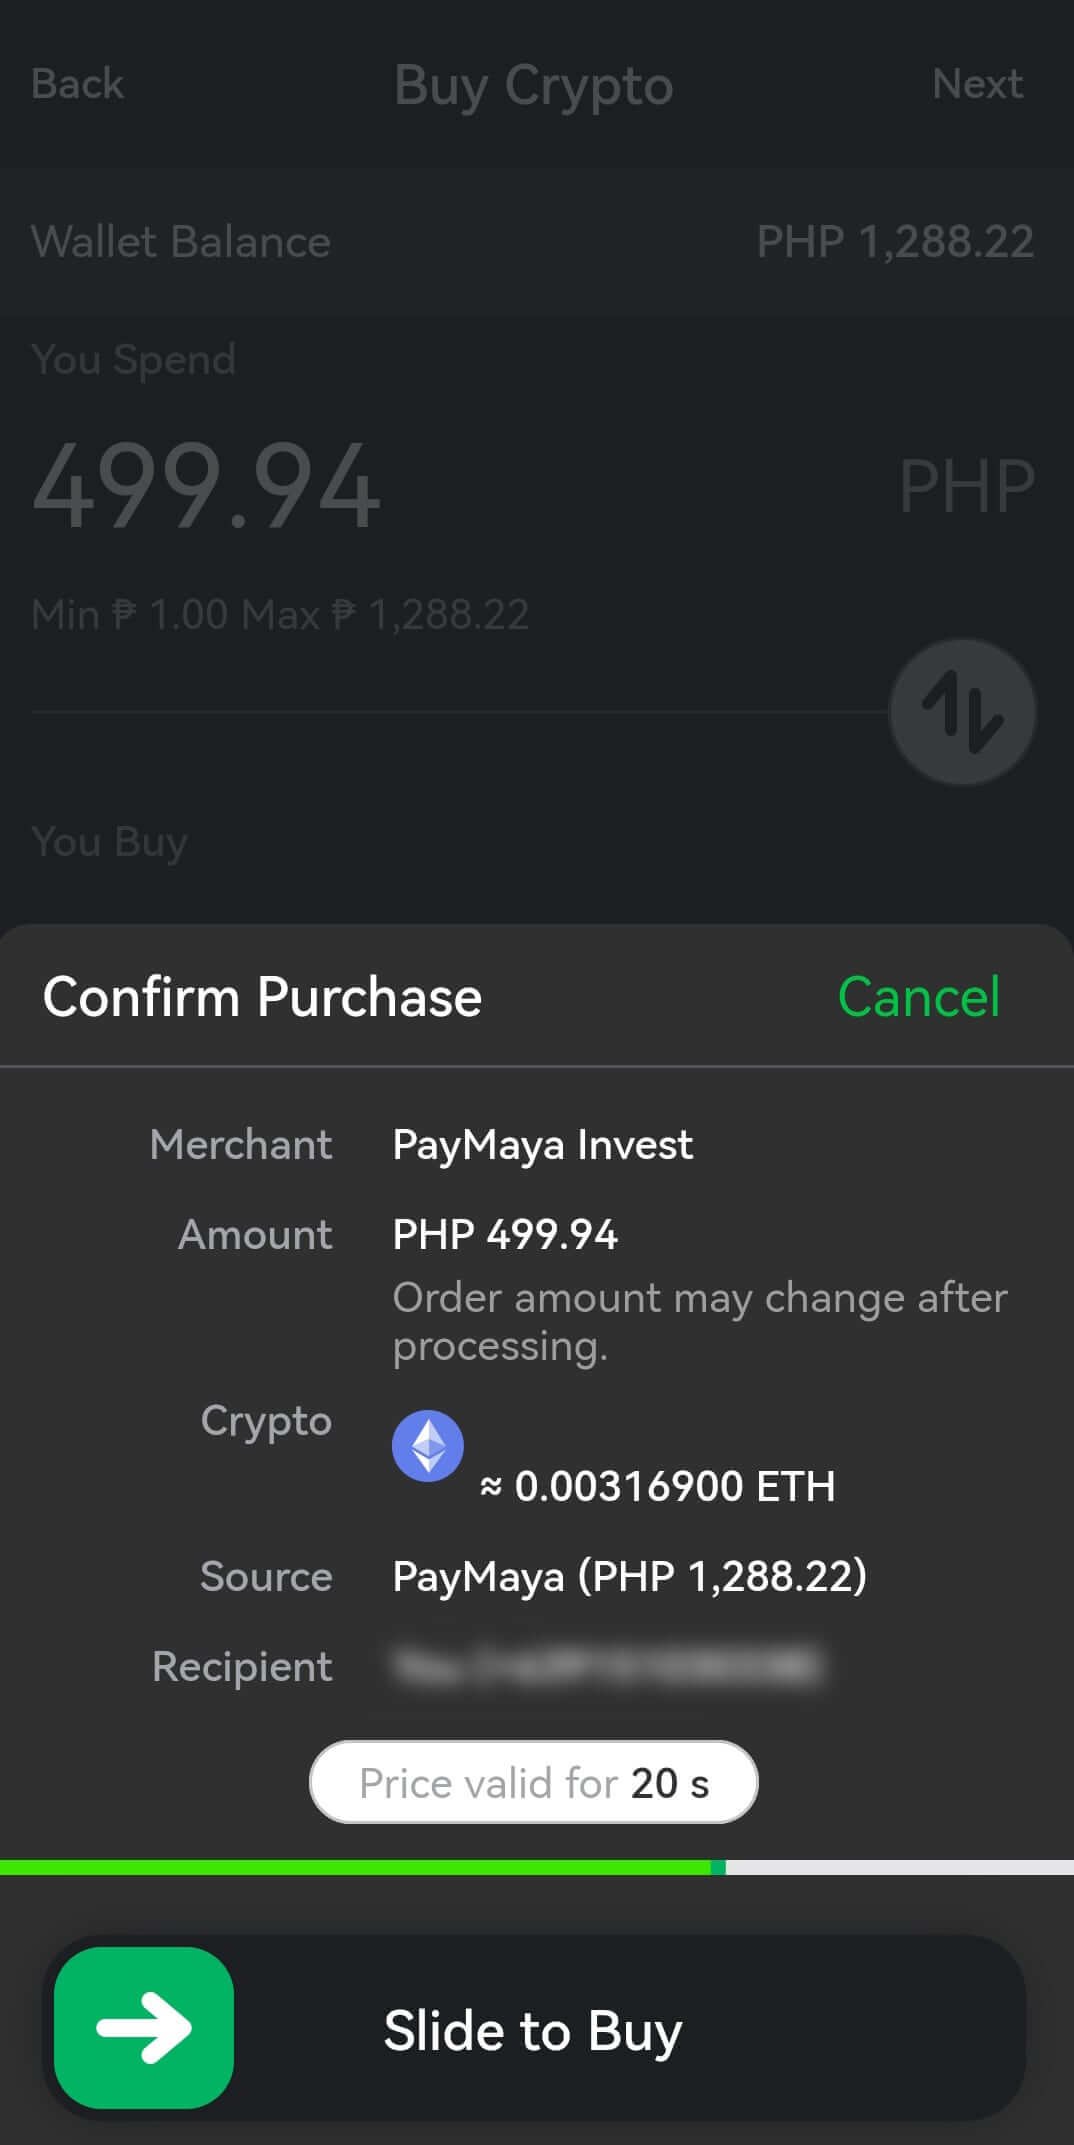 PayMaya Invest Crypto